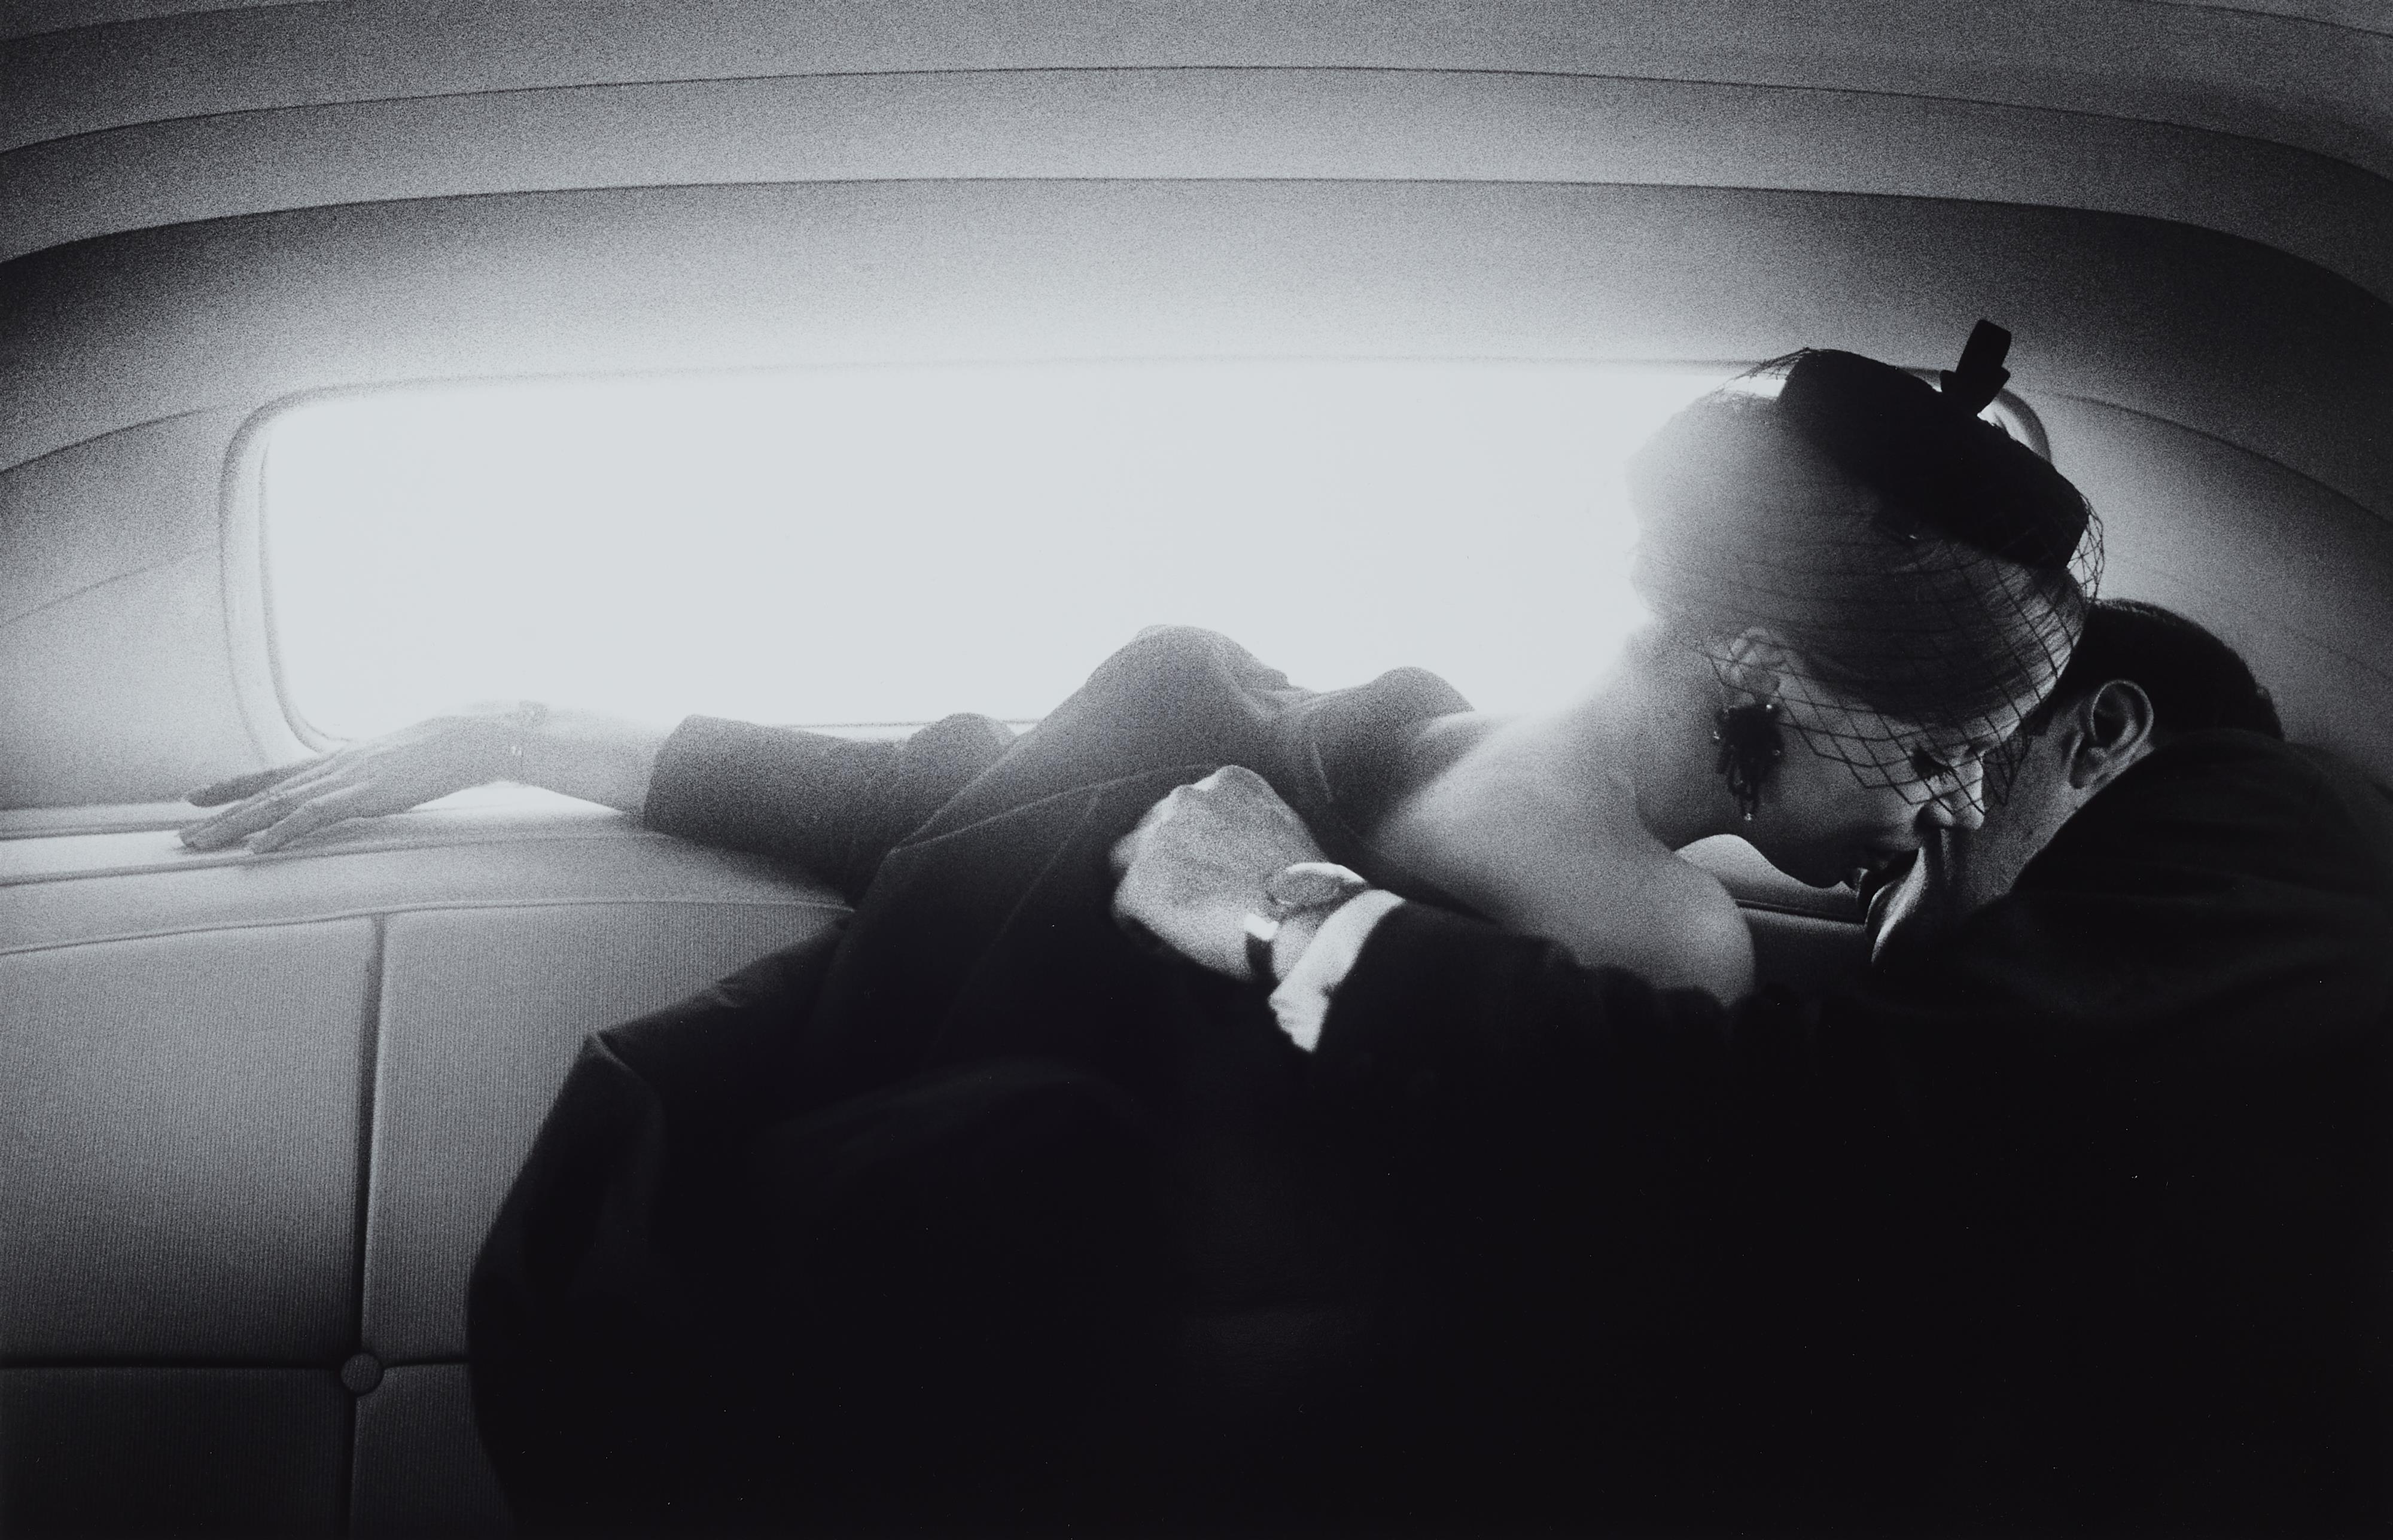 Jerry Schatzberg - Back Seat Romance, Gunilla Riva and Bob Smith, New York - image-1